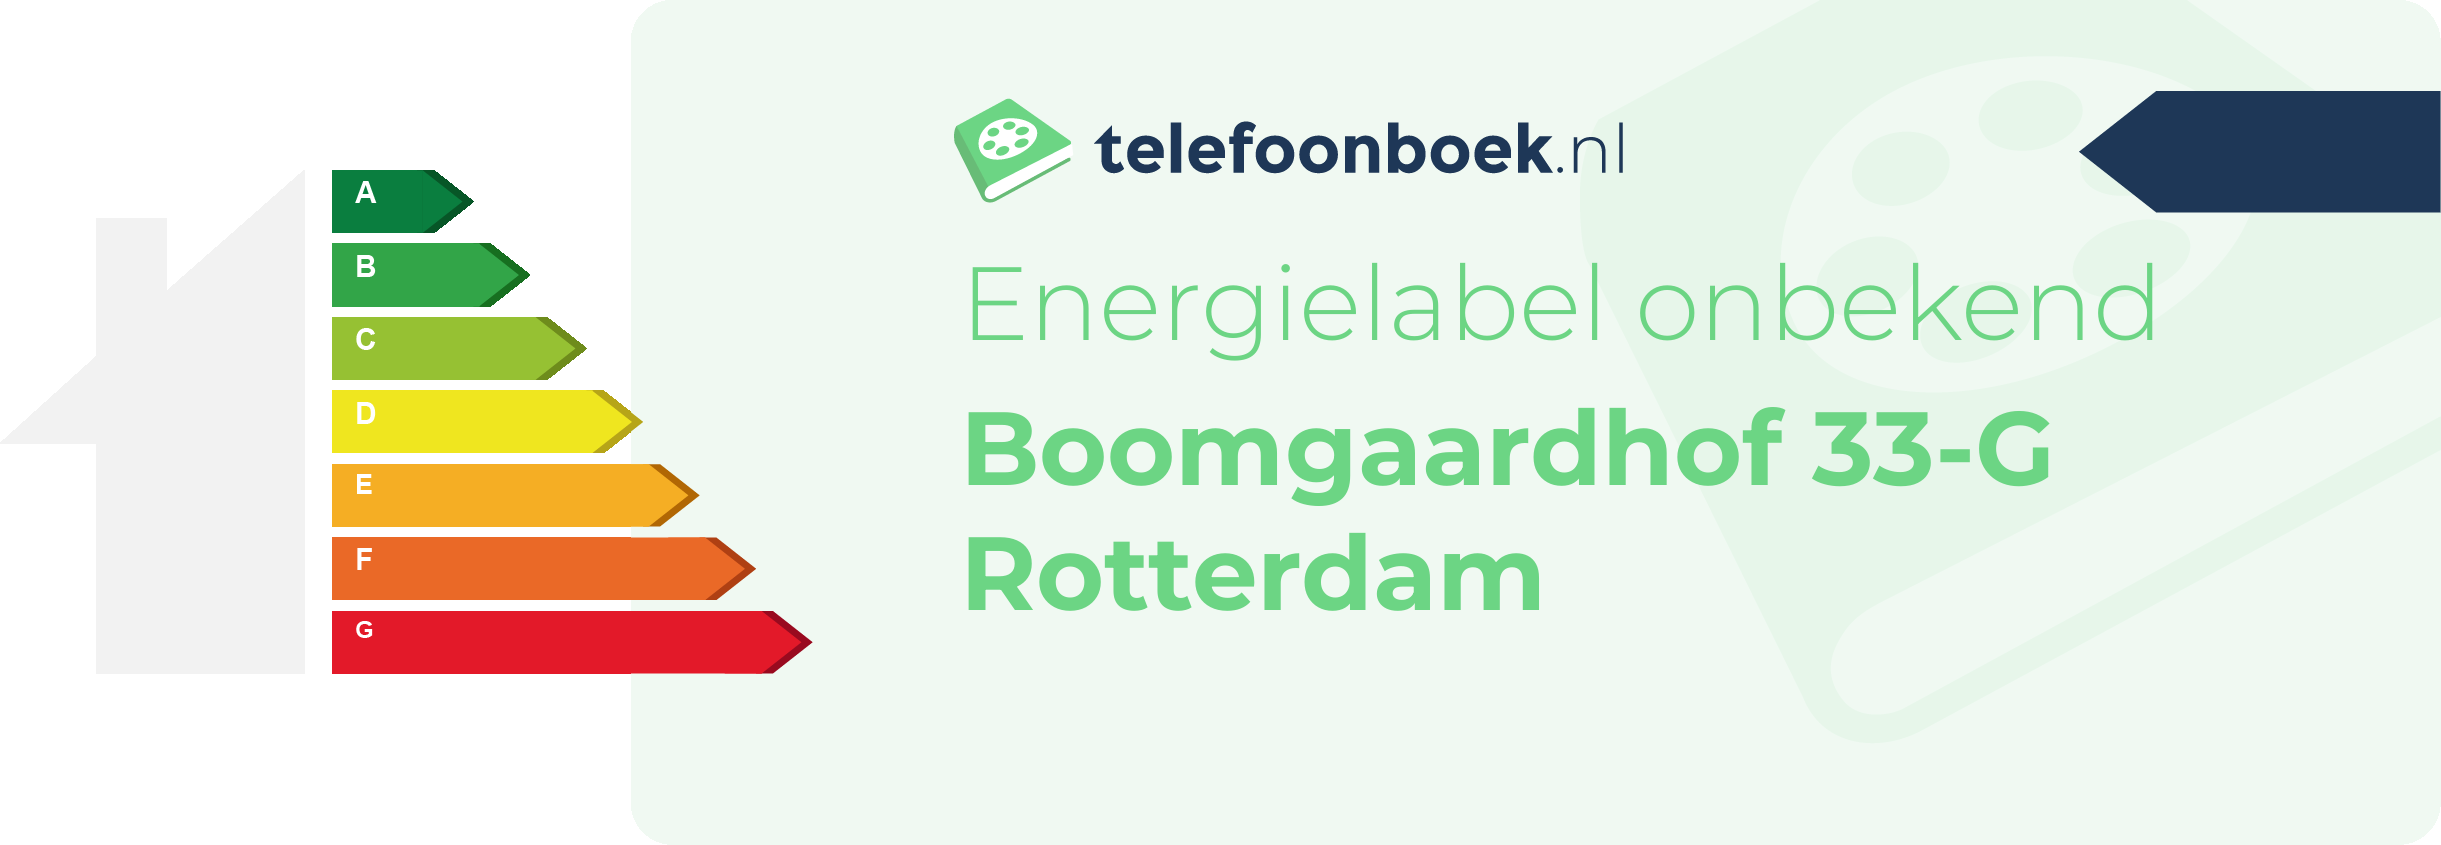 Energielabel Boomgaardhof 33-G Rotterdam